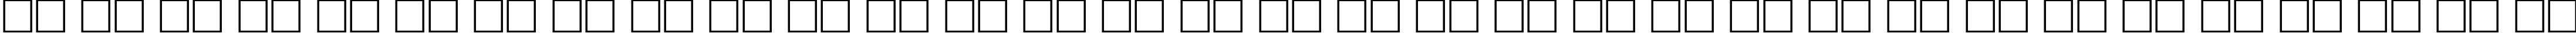 Пример написания русского алфавита шрифтом XBaltica_90n